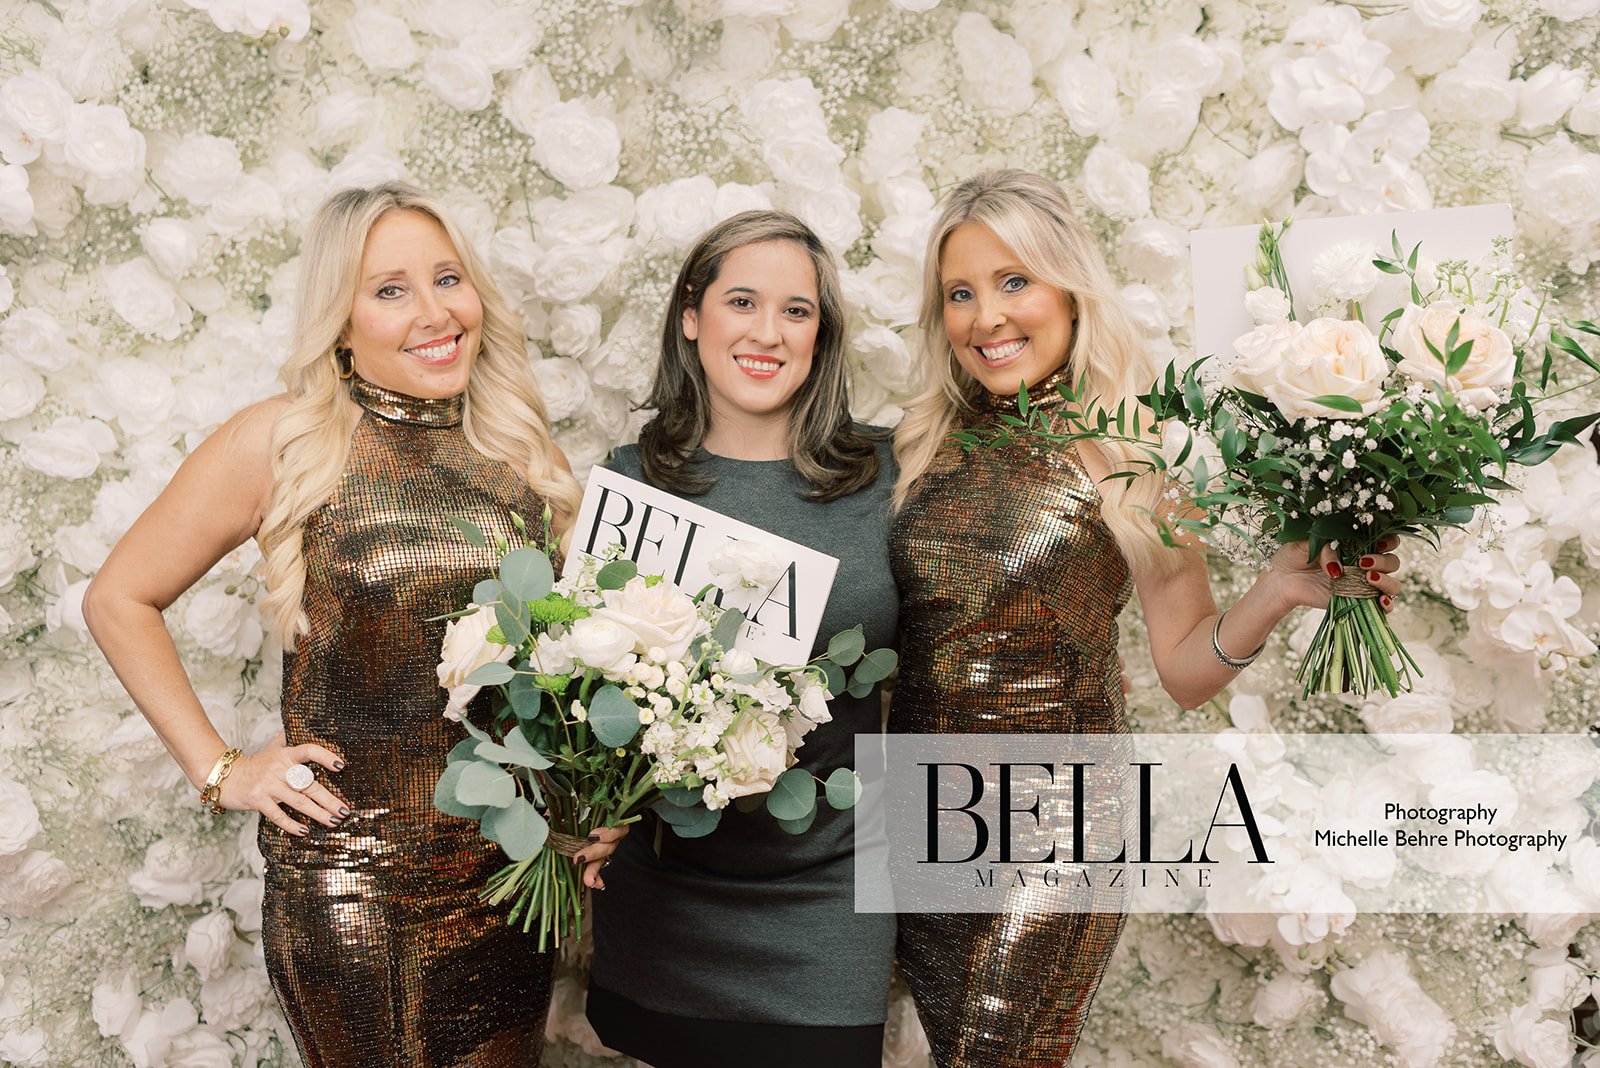 Michelle-Behre-Photography-BELLA-Magazine-Wedding-Event-La-Pulperia-New-York-42.jpg